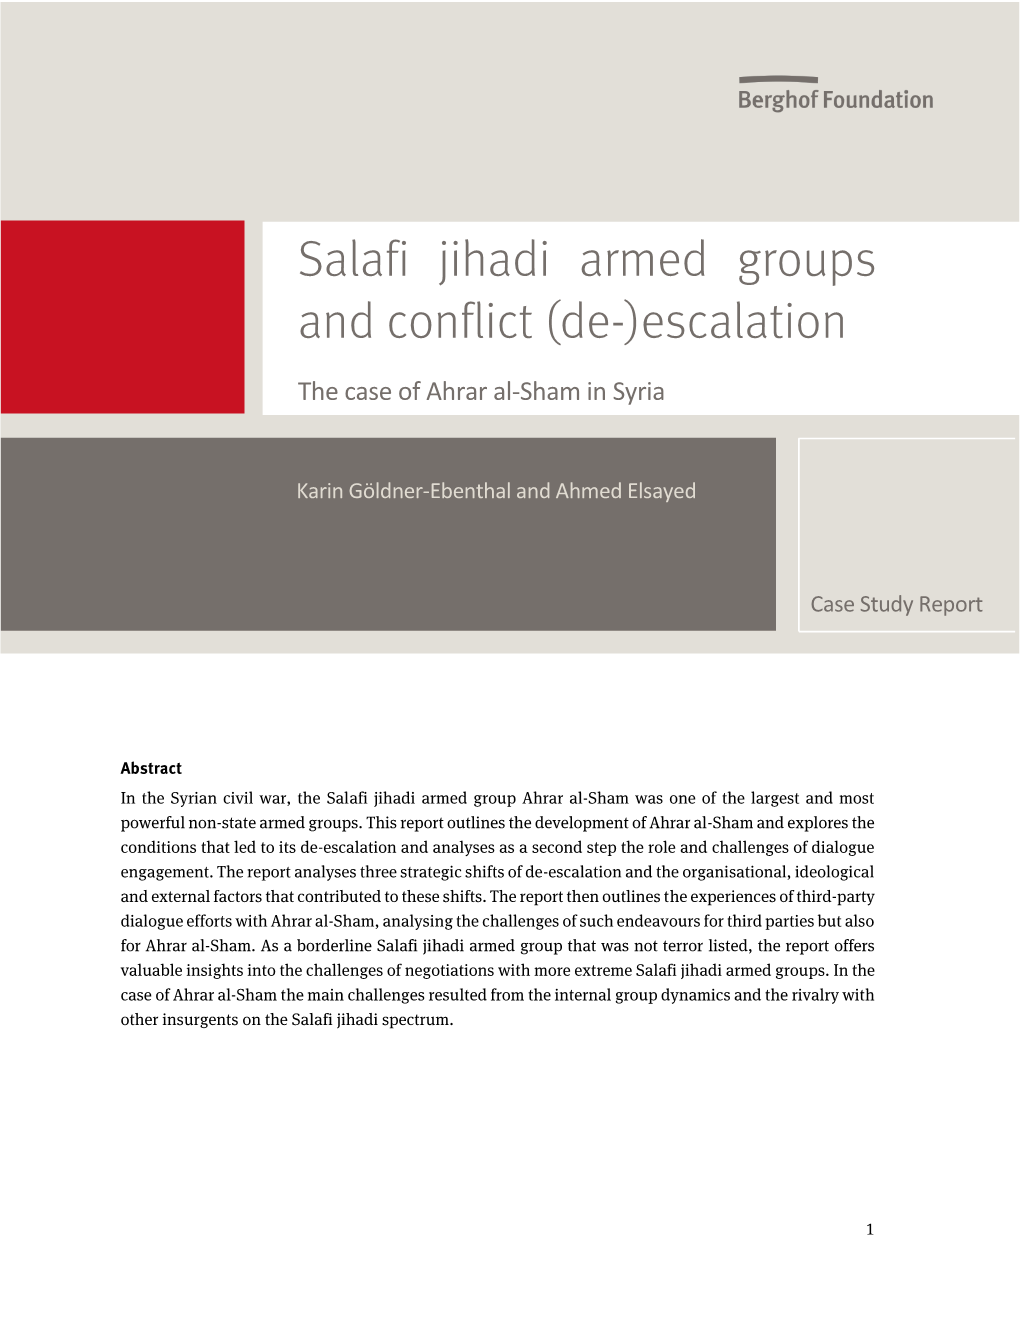 Salafi Jihadi Armed Groups and Conflict (De-)Escalation